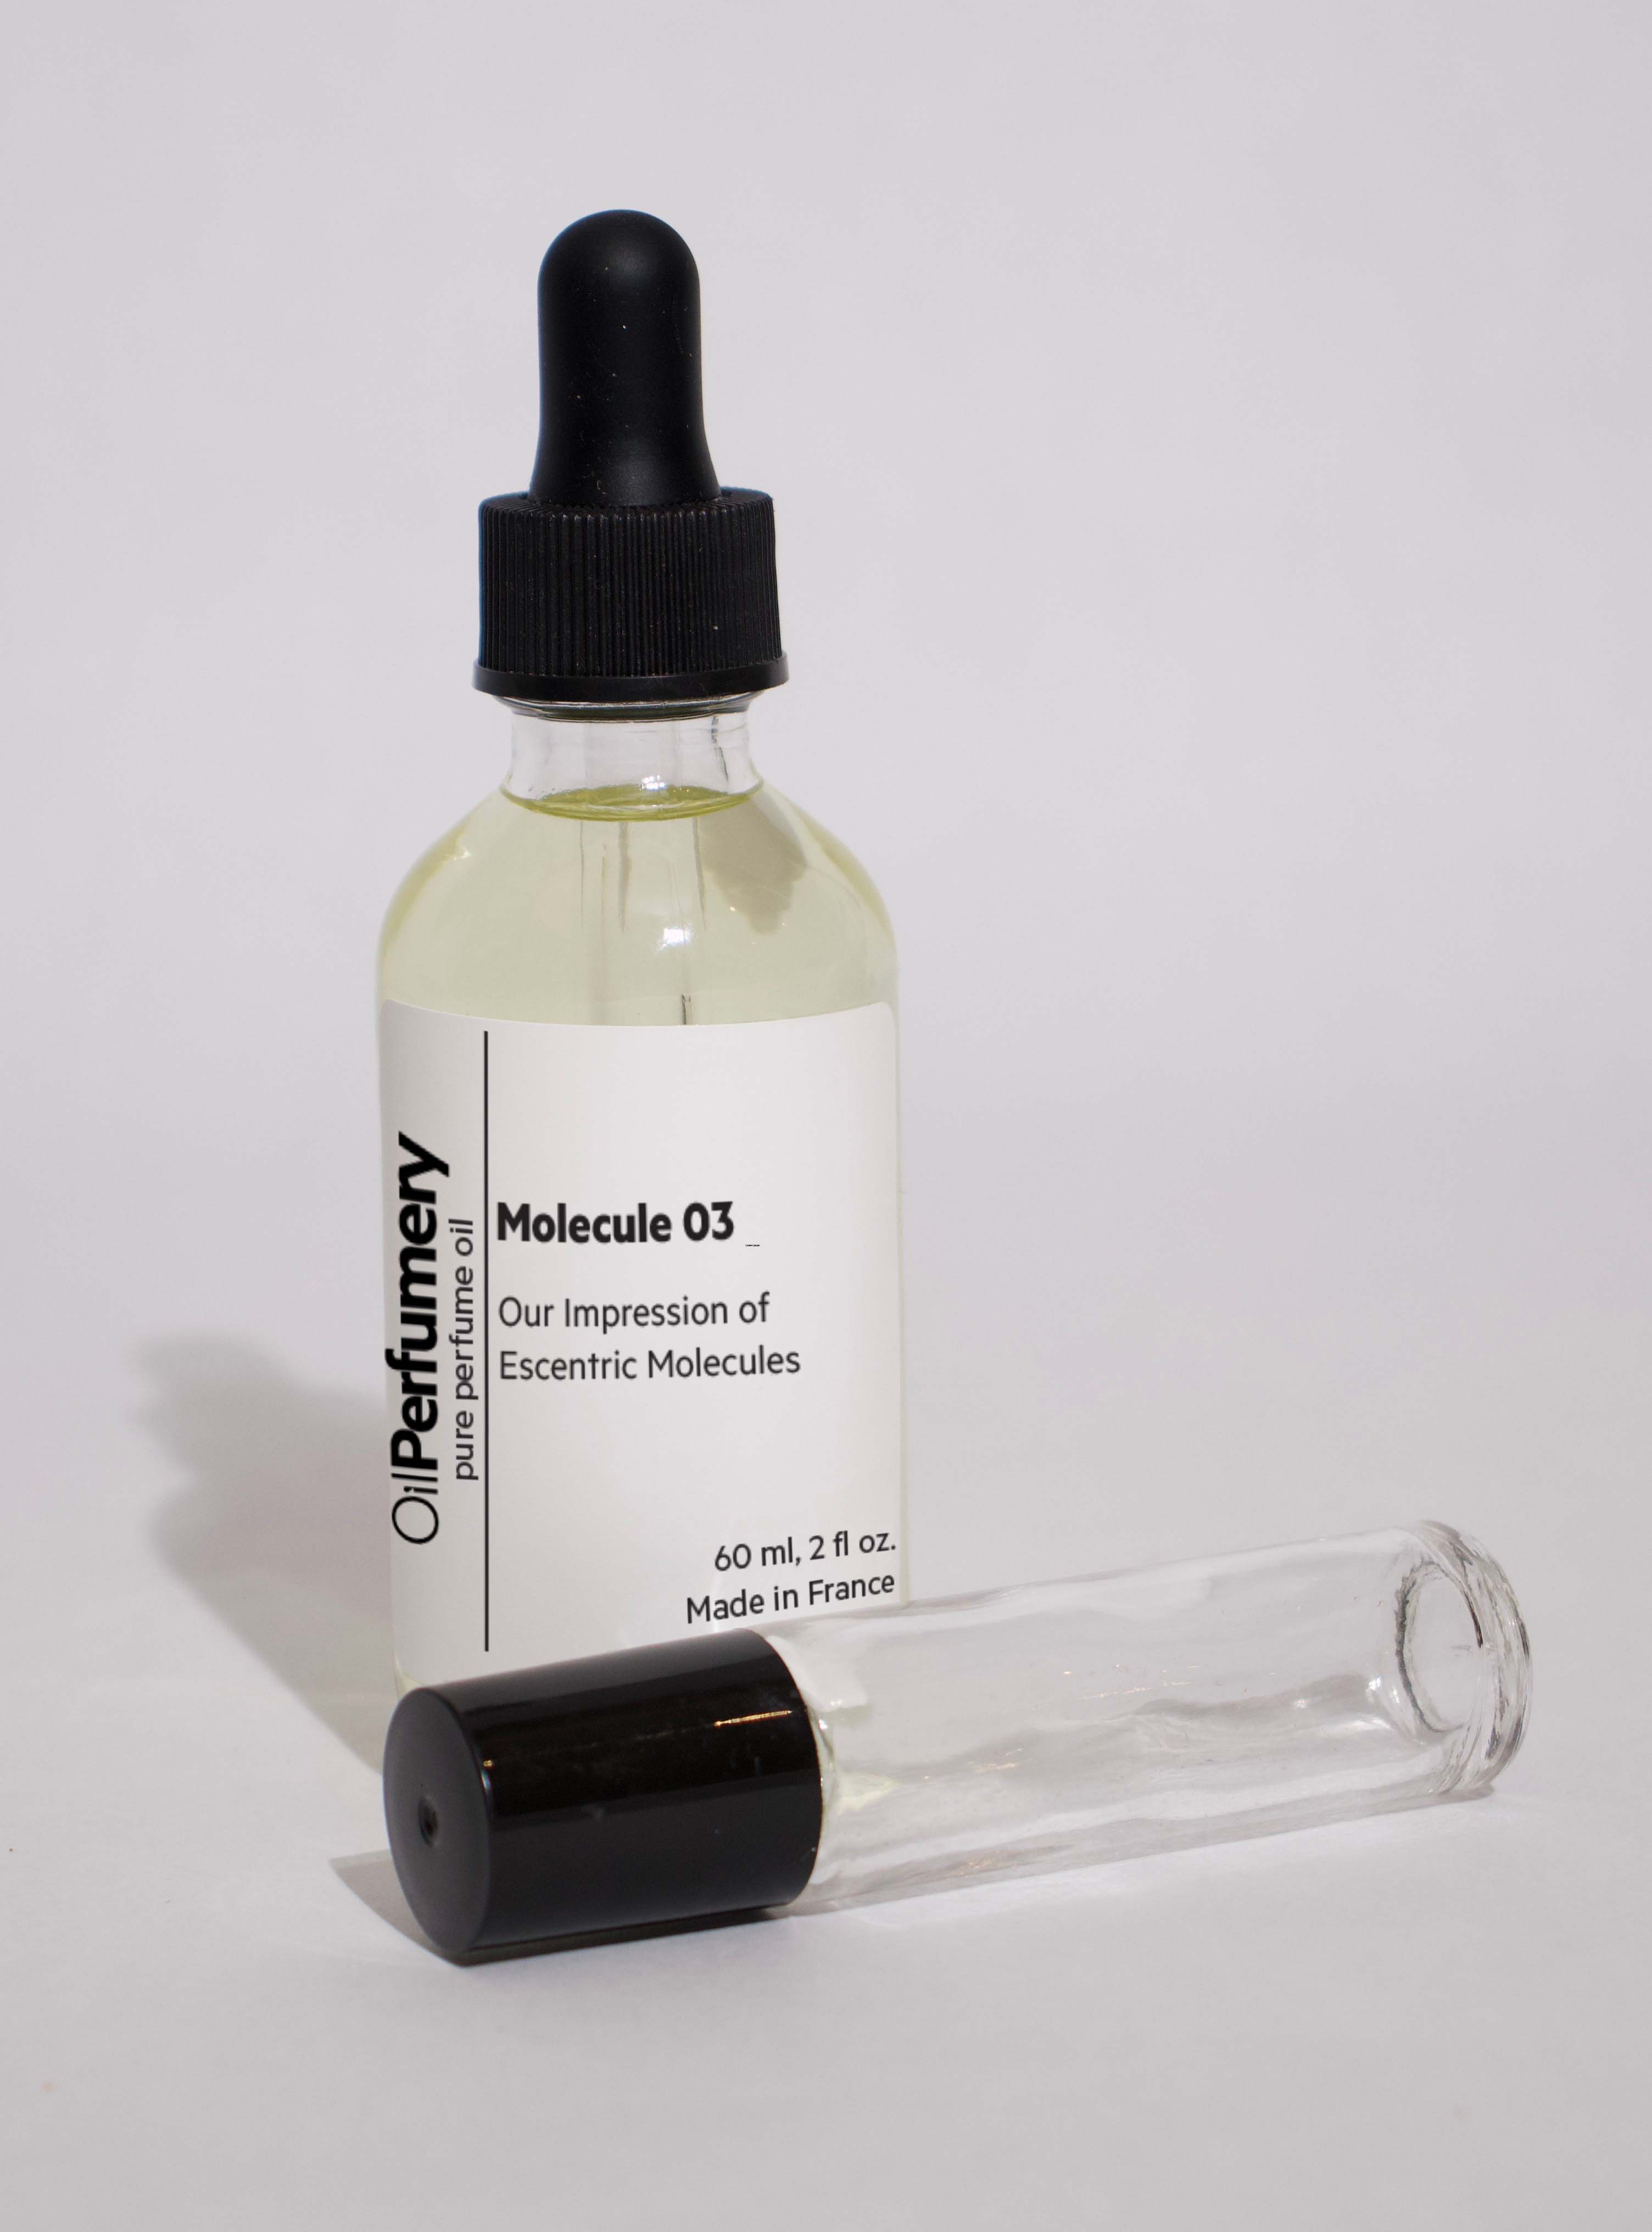 Oil Perfumery Impression of Escentric Molecules - Molecule 03